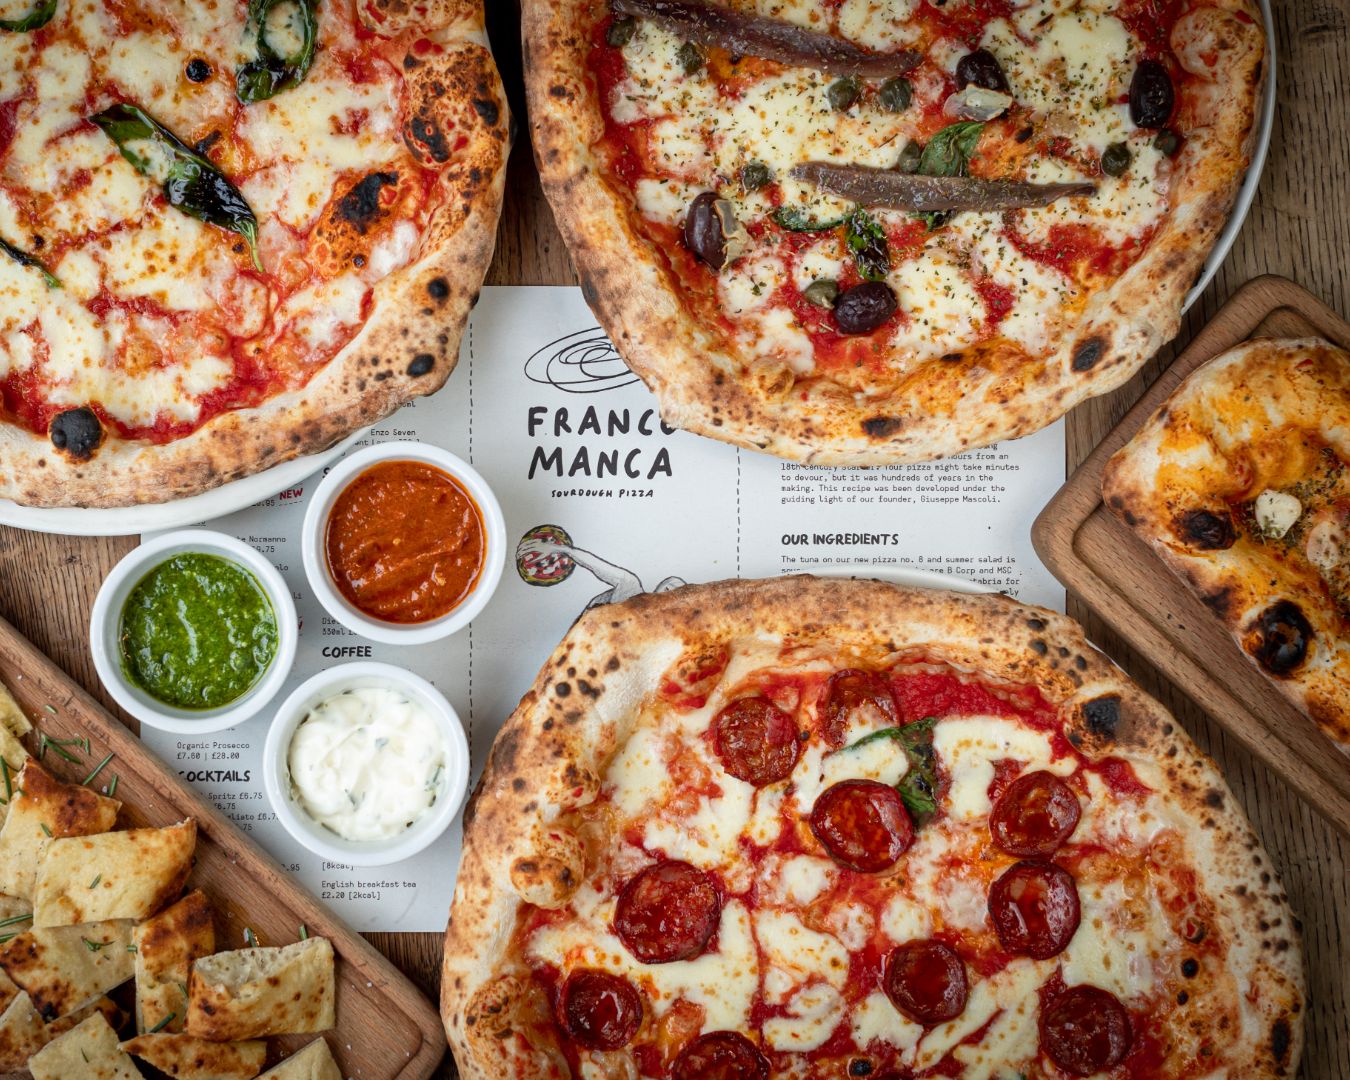 Franco Manca pizzas and sauces